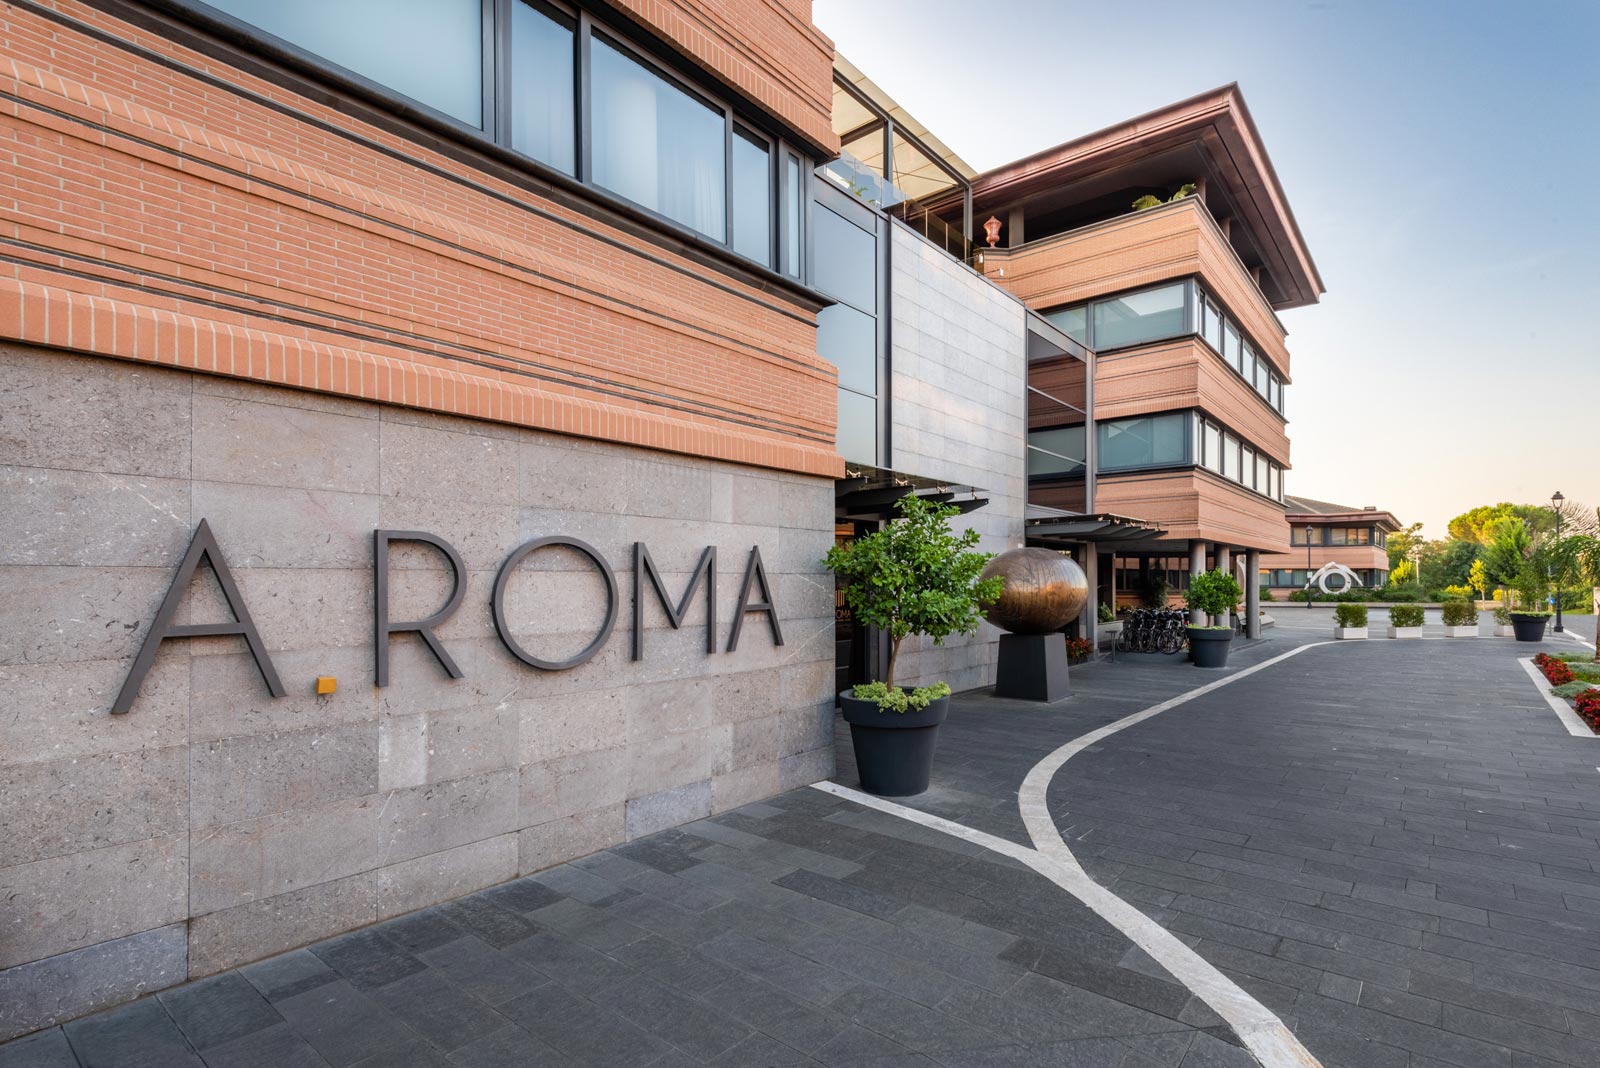 A.Roma Lifestyle Hotel